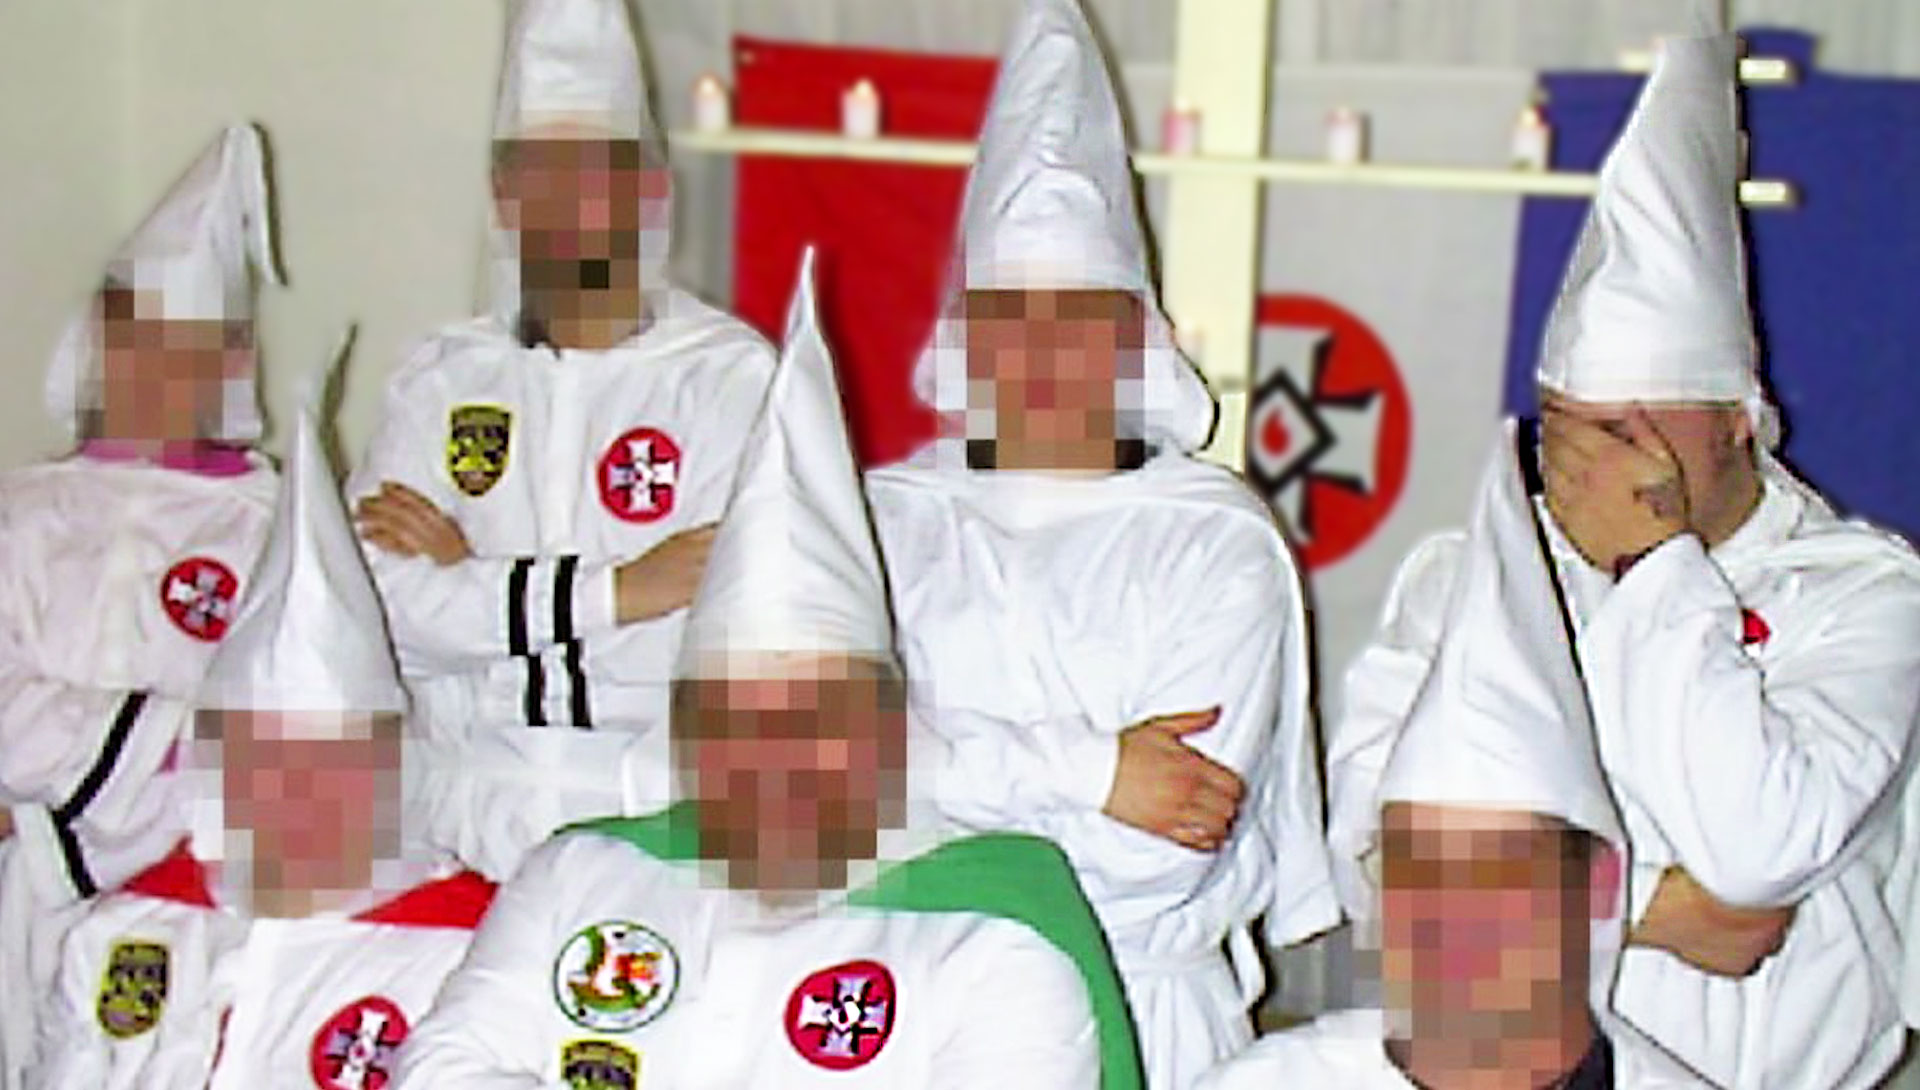 Nazi Skinhead Porn - I Was a Neo-Nazi Skinhead and Joined the Ku Klux Klan: How I Left | Erase  the Hate